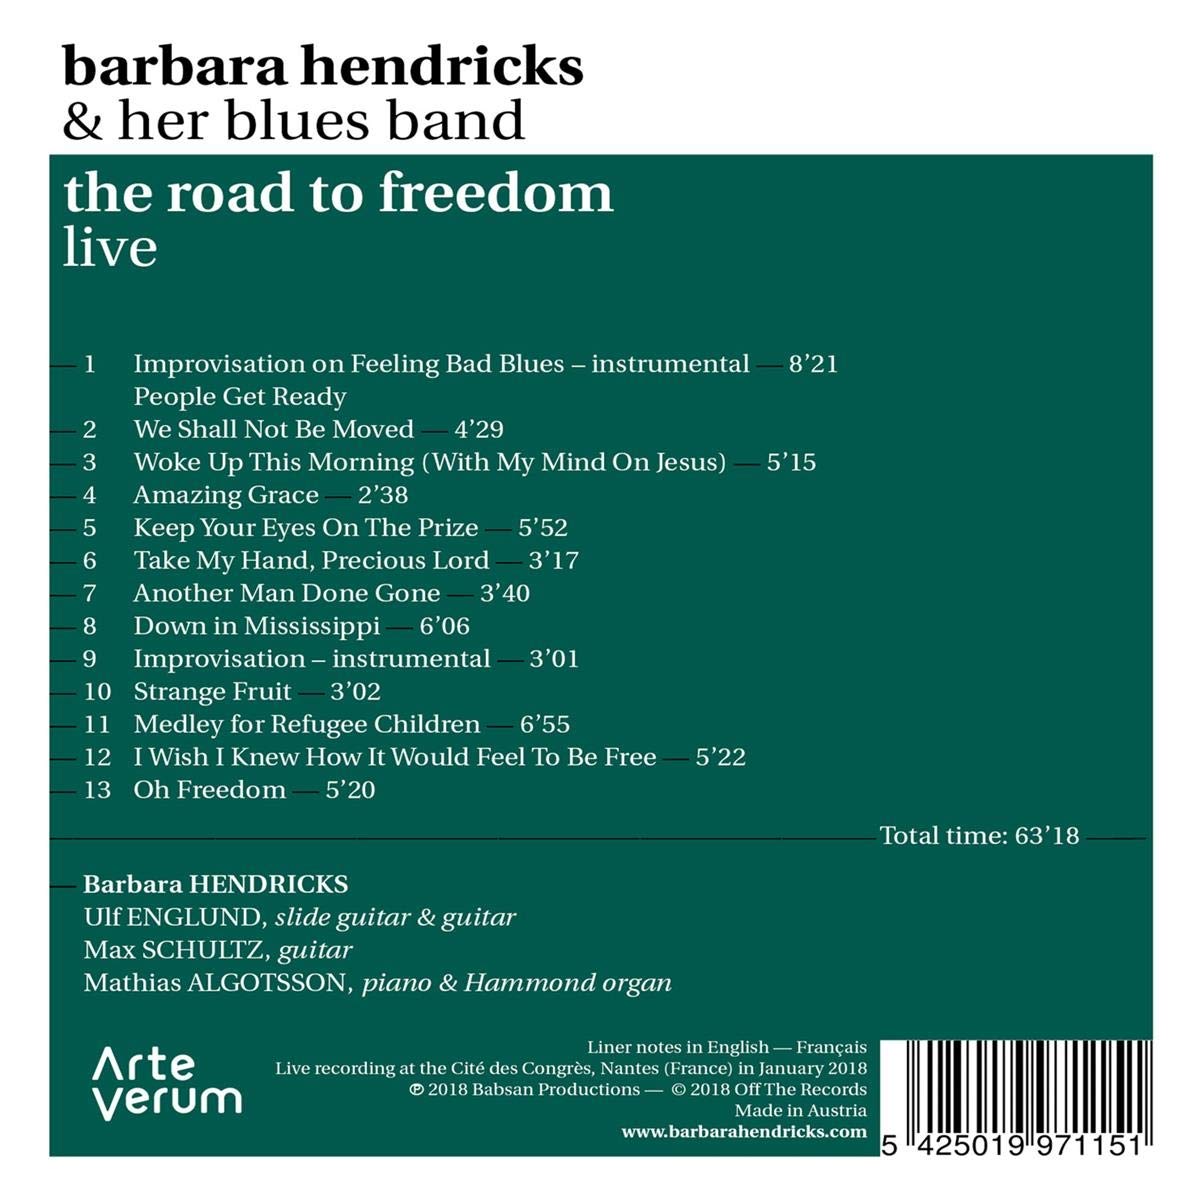 Barbara Hendricks & her Blues Band (바바라 헨드릭스 앤 허 블루스 밴드) - The Road to Freedom